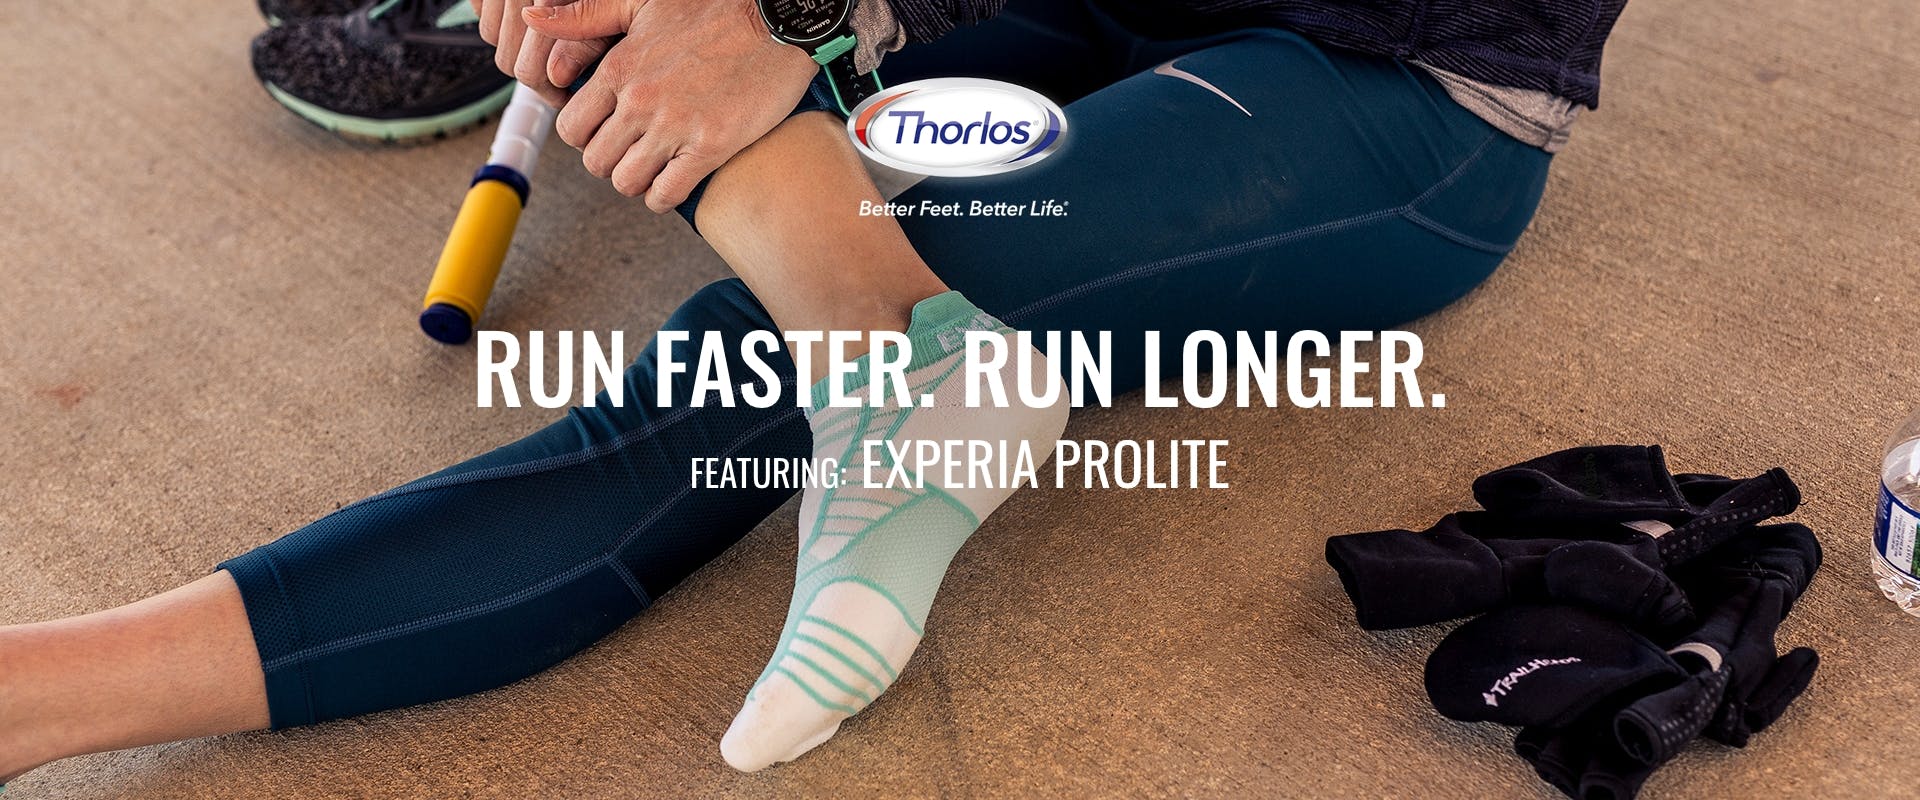 Thorlos Run Faster RUn longer featuring Experia prolite